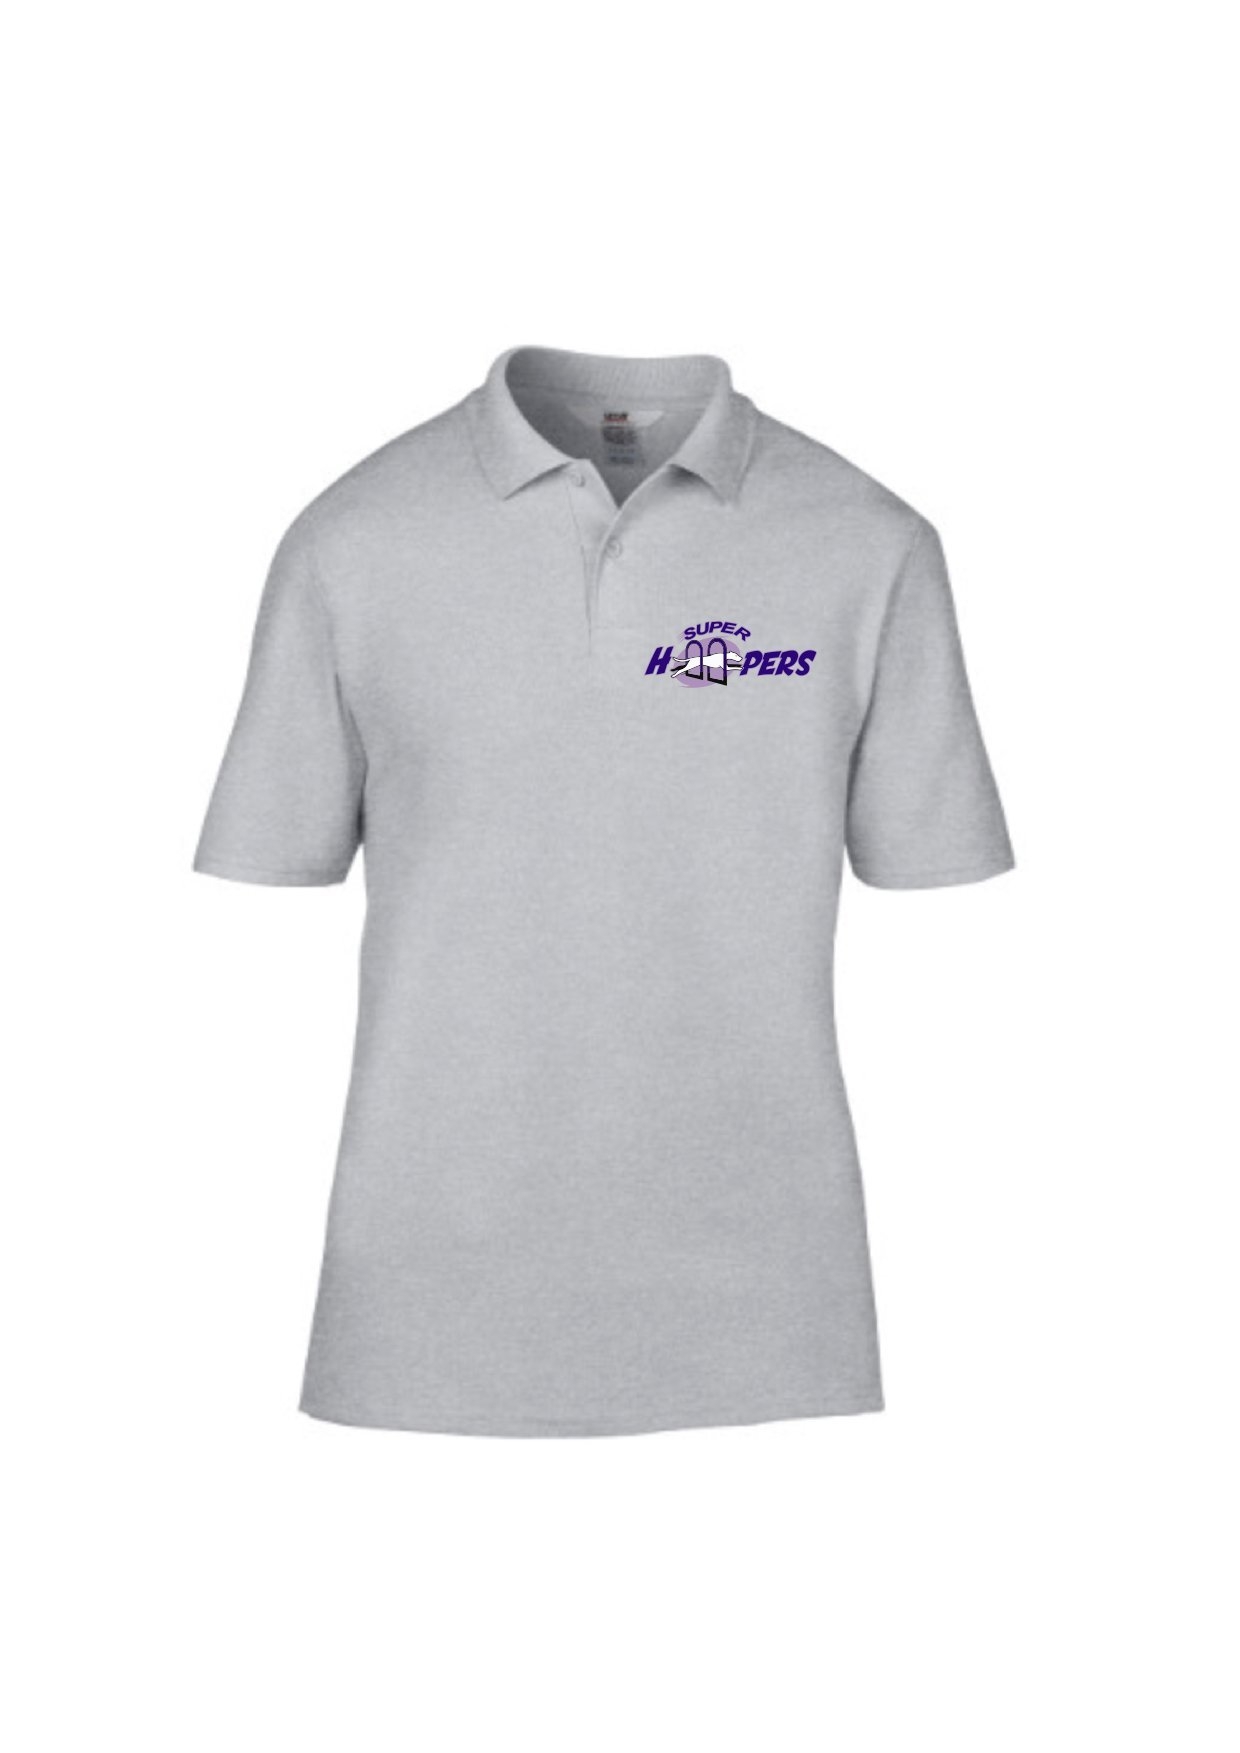 Super Hoopers Polo shirt Medium – Grey – Pooch